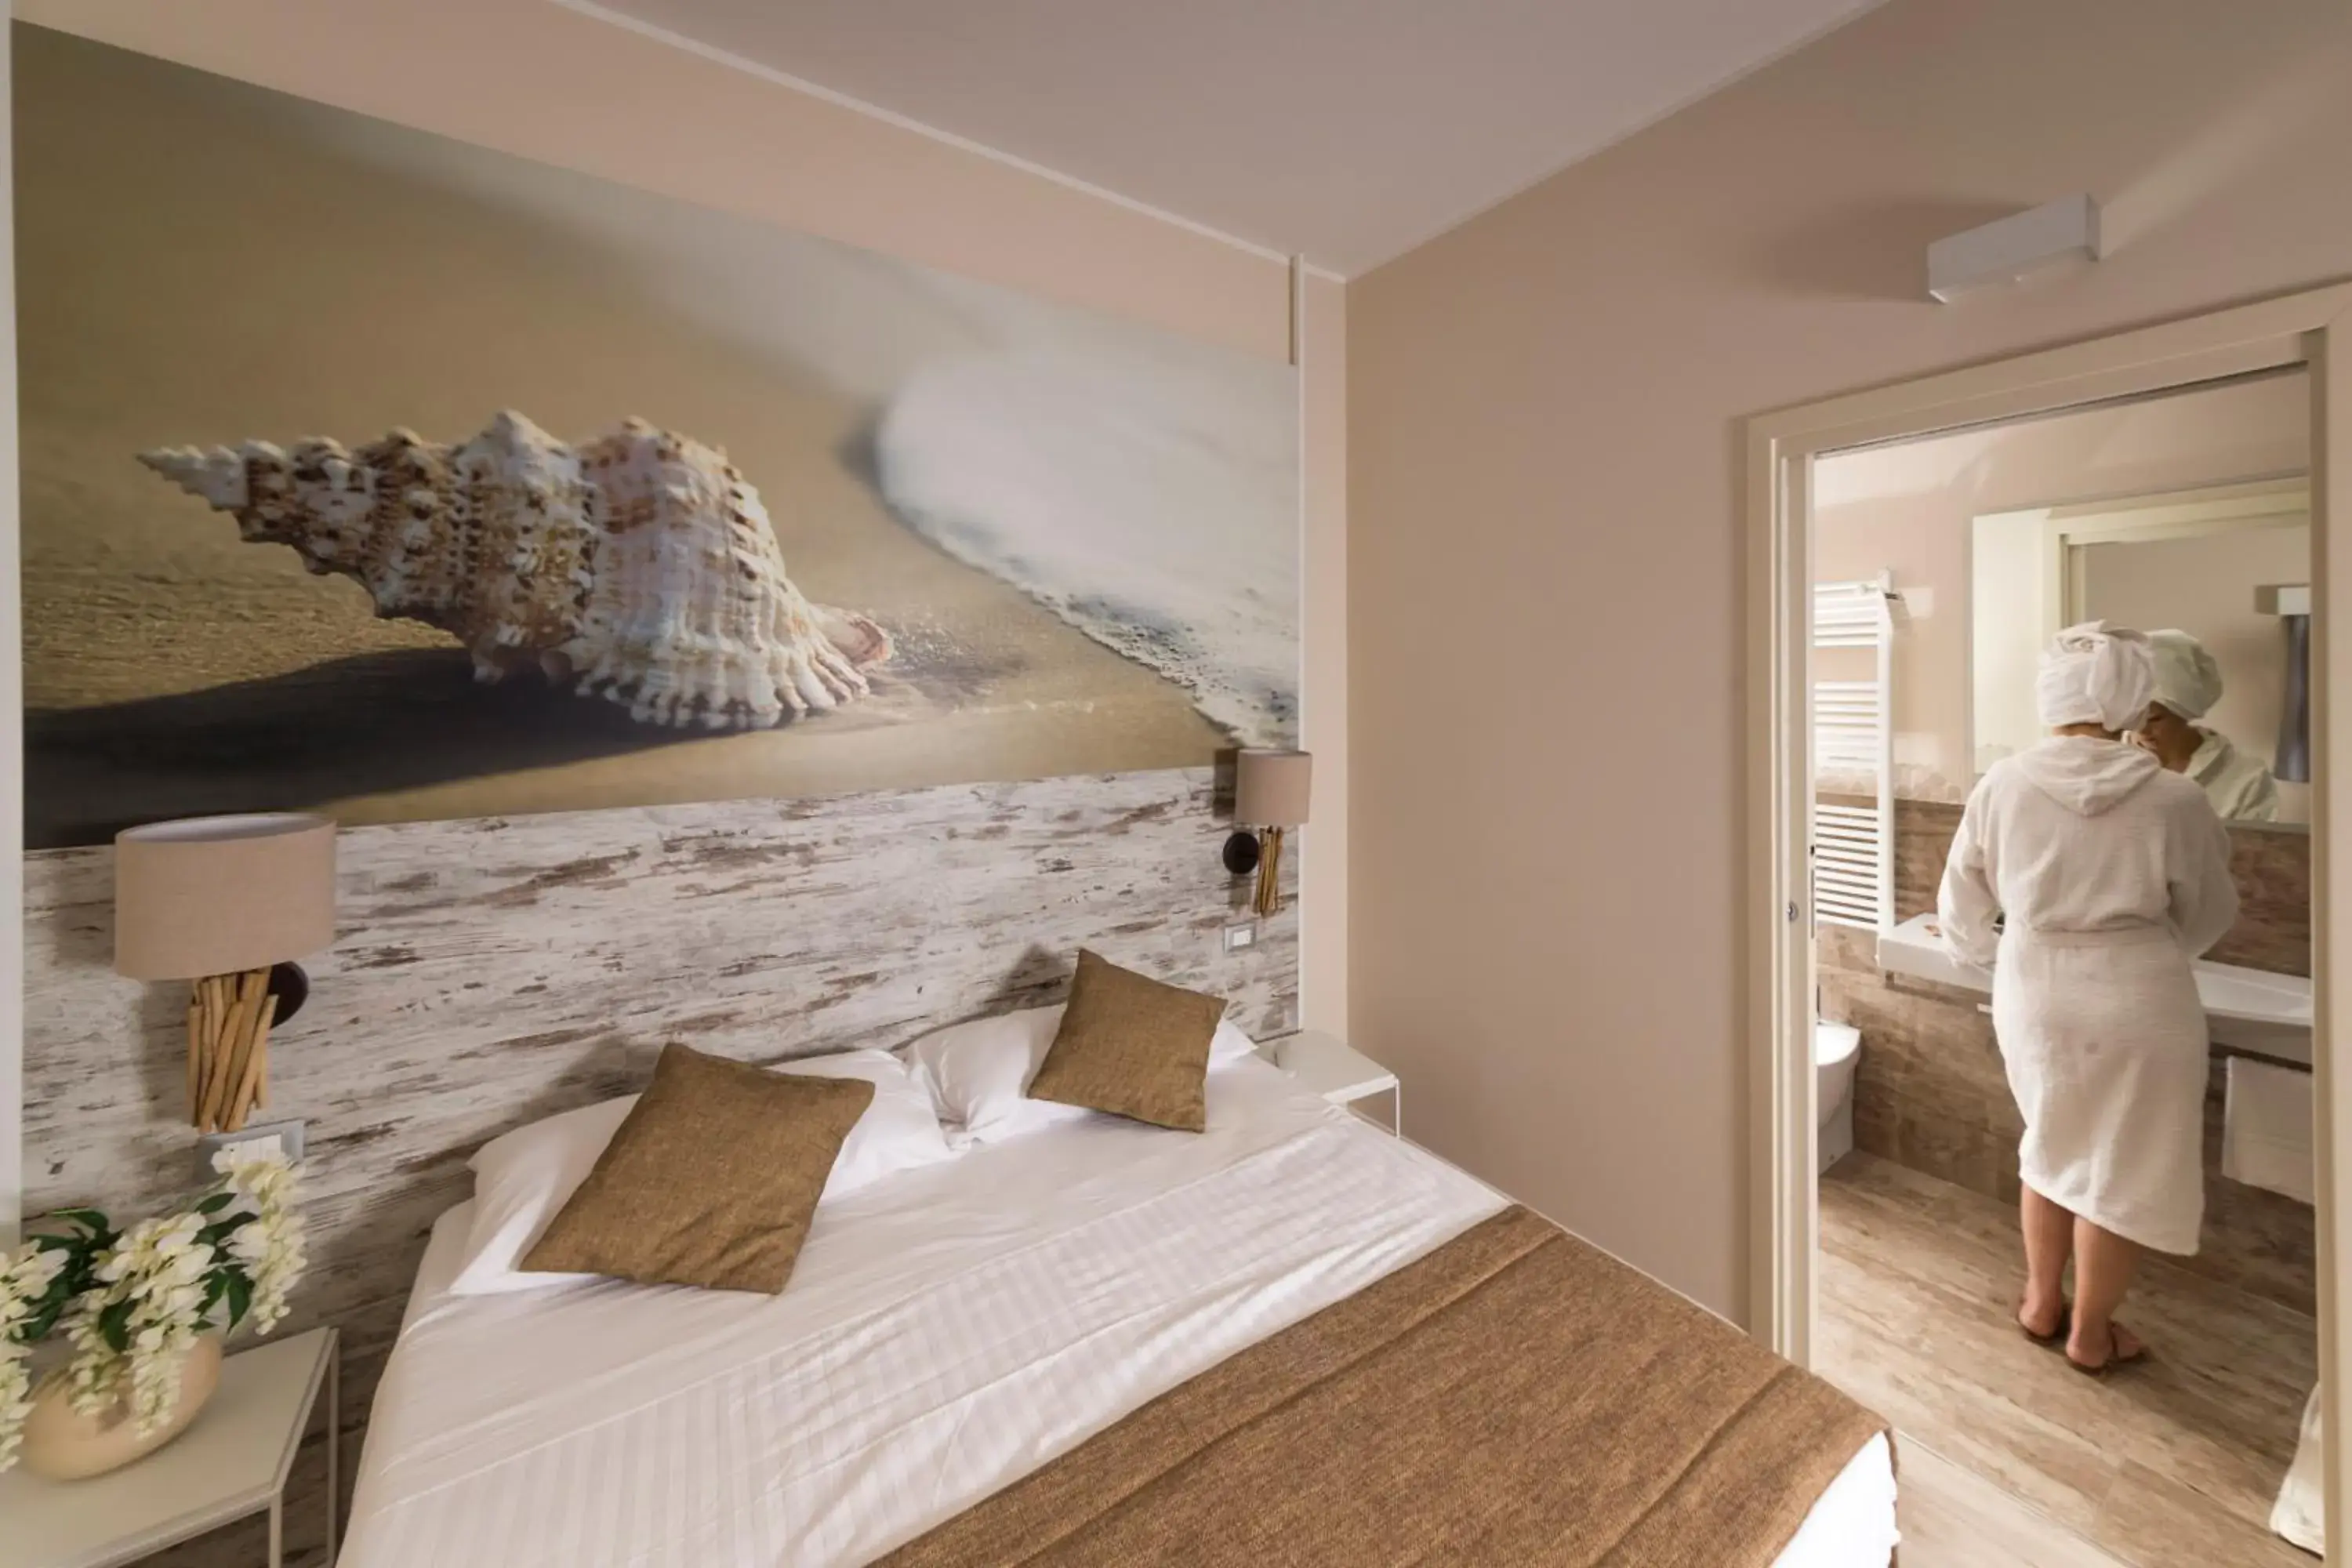 Bedroom, Room Photo in Hotel Life